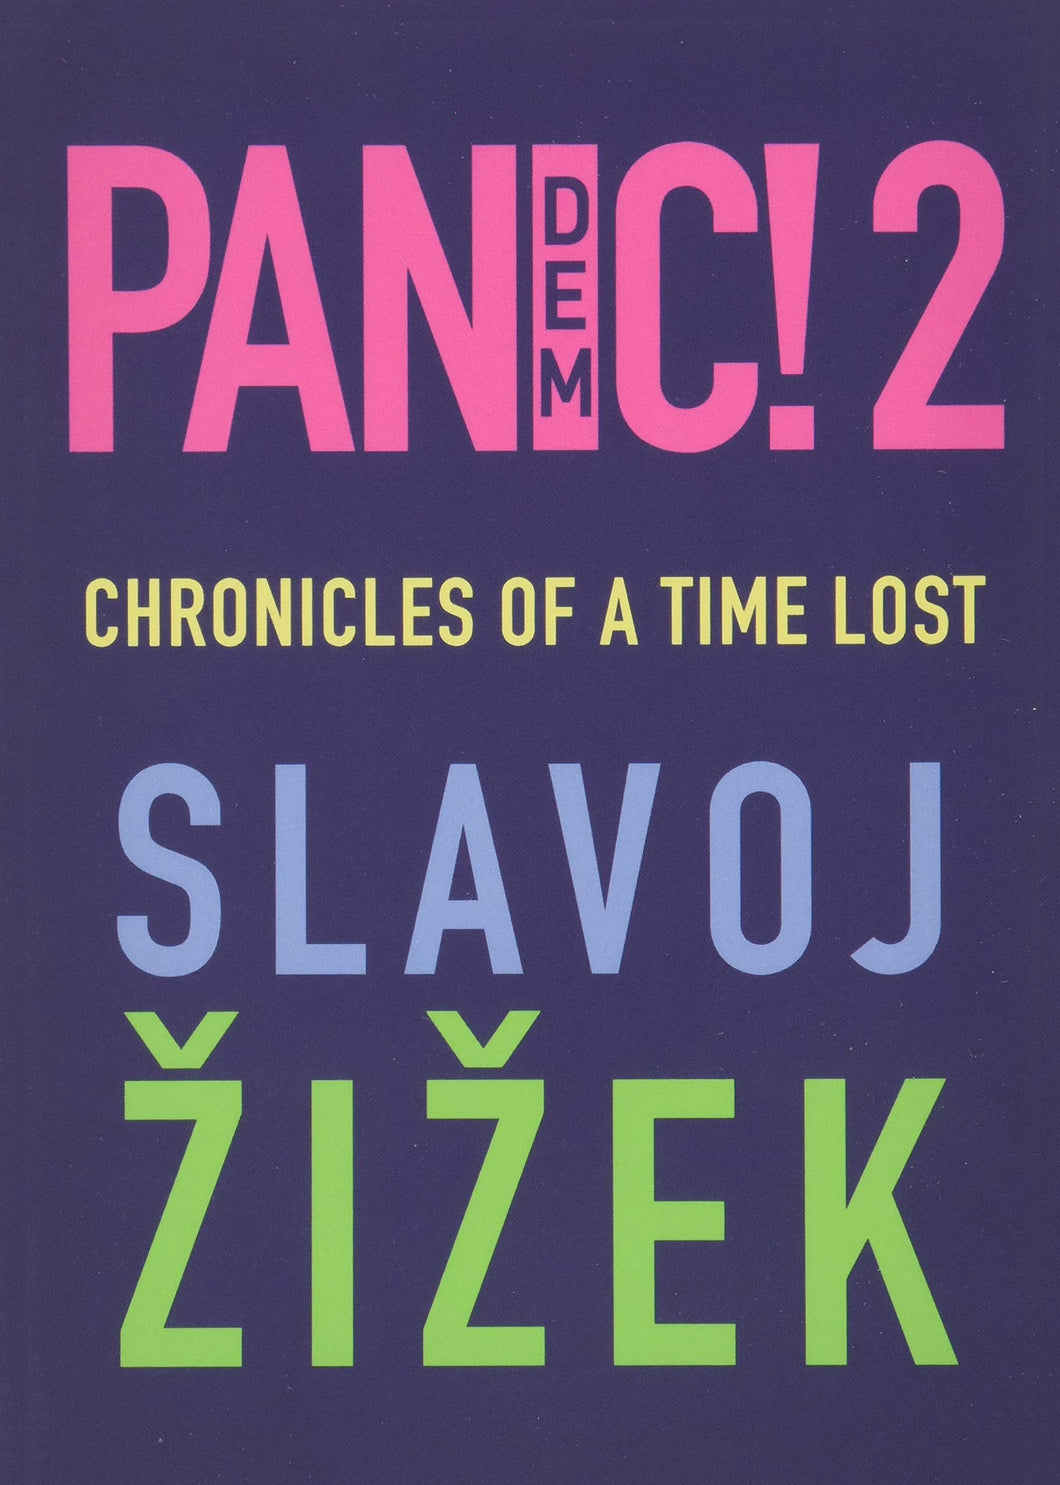 Pandemic! 2 : Chronicles of a Time Lost ร้านหนังสือและสิ่งของ เป็นร้านหนังสือภาษาอังกฤษหายาก และร้านกาแฟ หรือ บุ๊คคาเฟ่ ตั้งอยู่สุขุมวิท กรุงเทพ